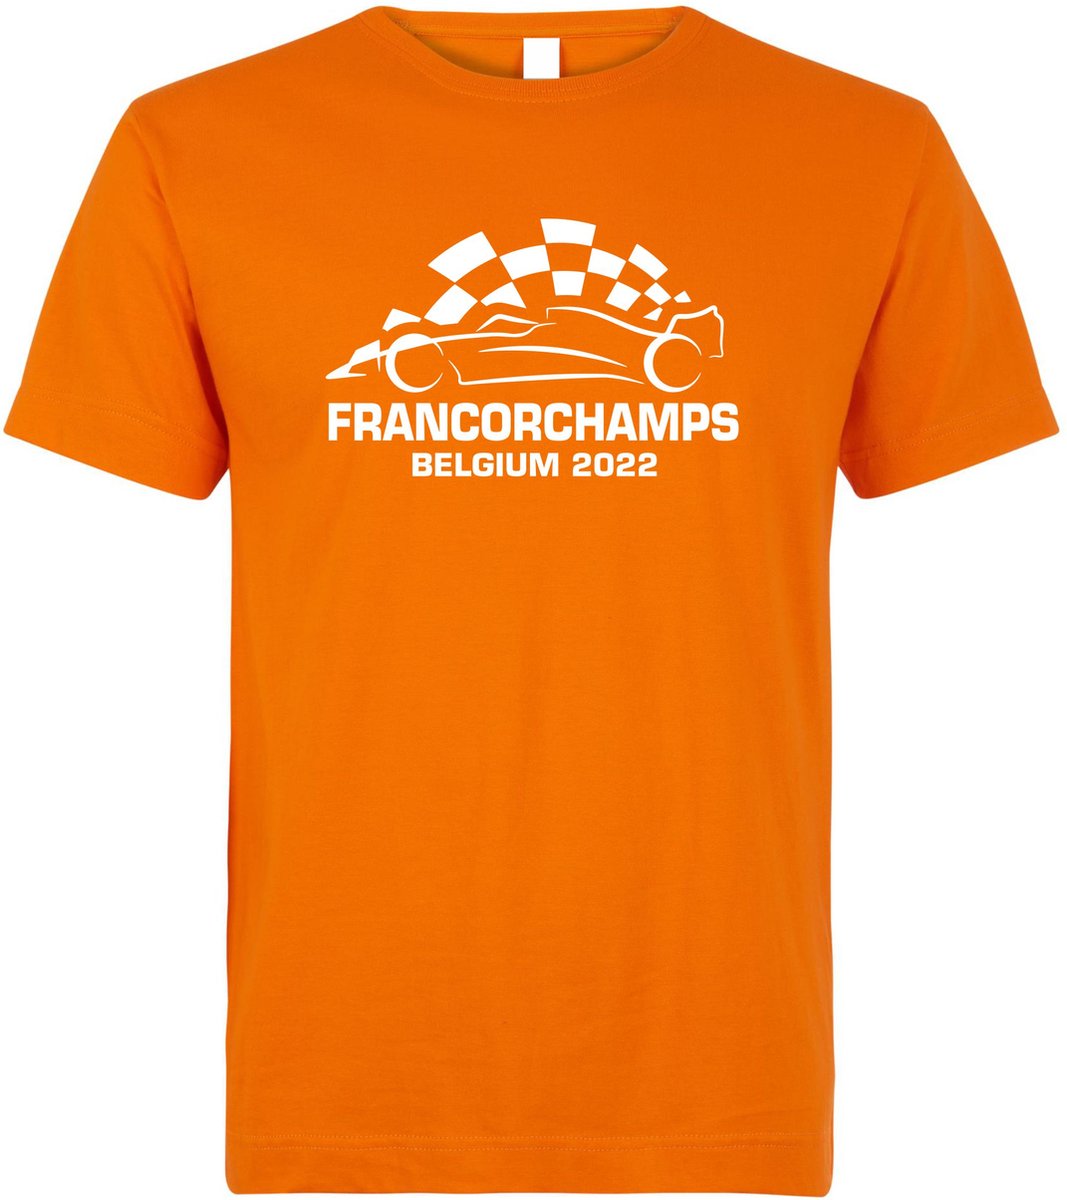 T-shirt kinderen Francorchamps Belgium 2022 met raceauto | Max Verstappen / Red Bull Racing / Formule 1 fan | Grand Prix Circuit Spa-Francorchamps | kleding shirt | Oranje | maat 128